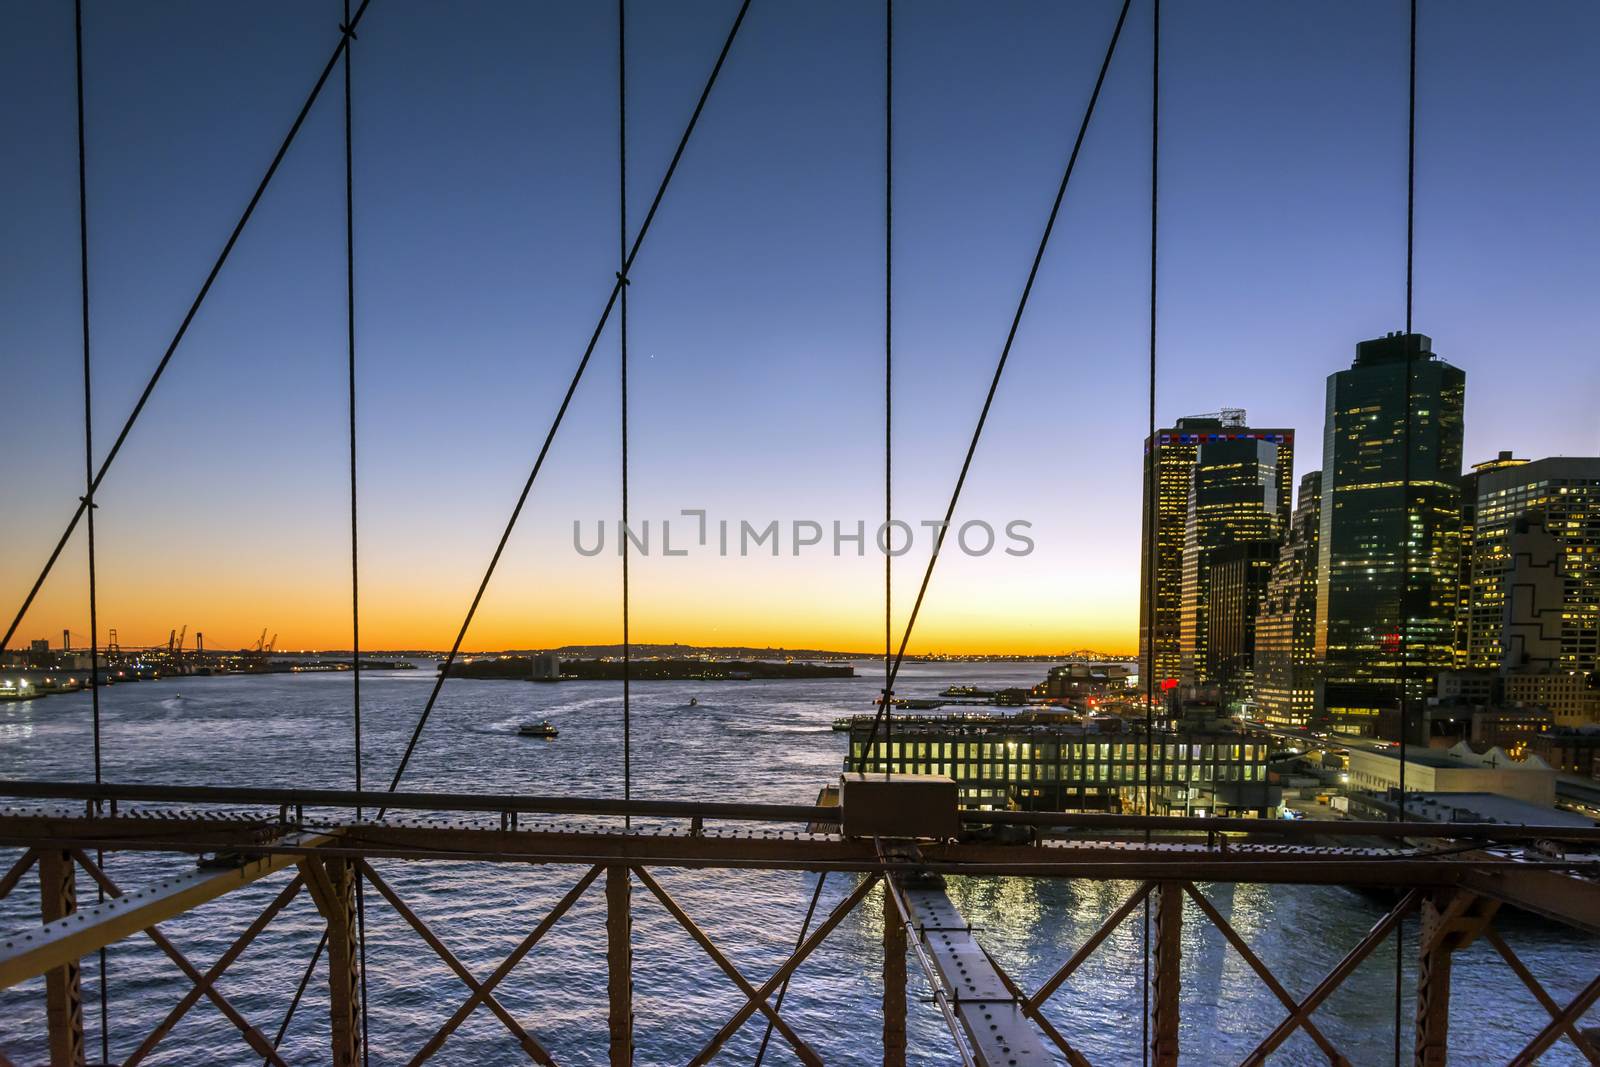 New York at sunset viewed from Brooklyn bridge